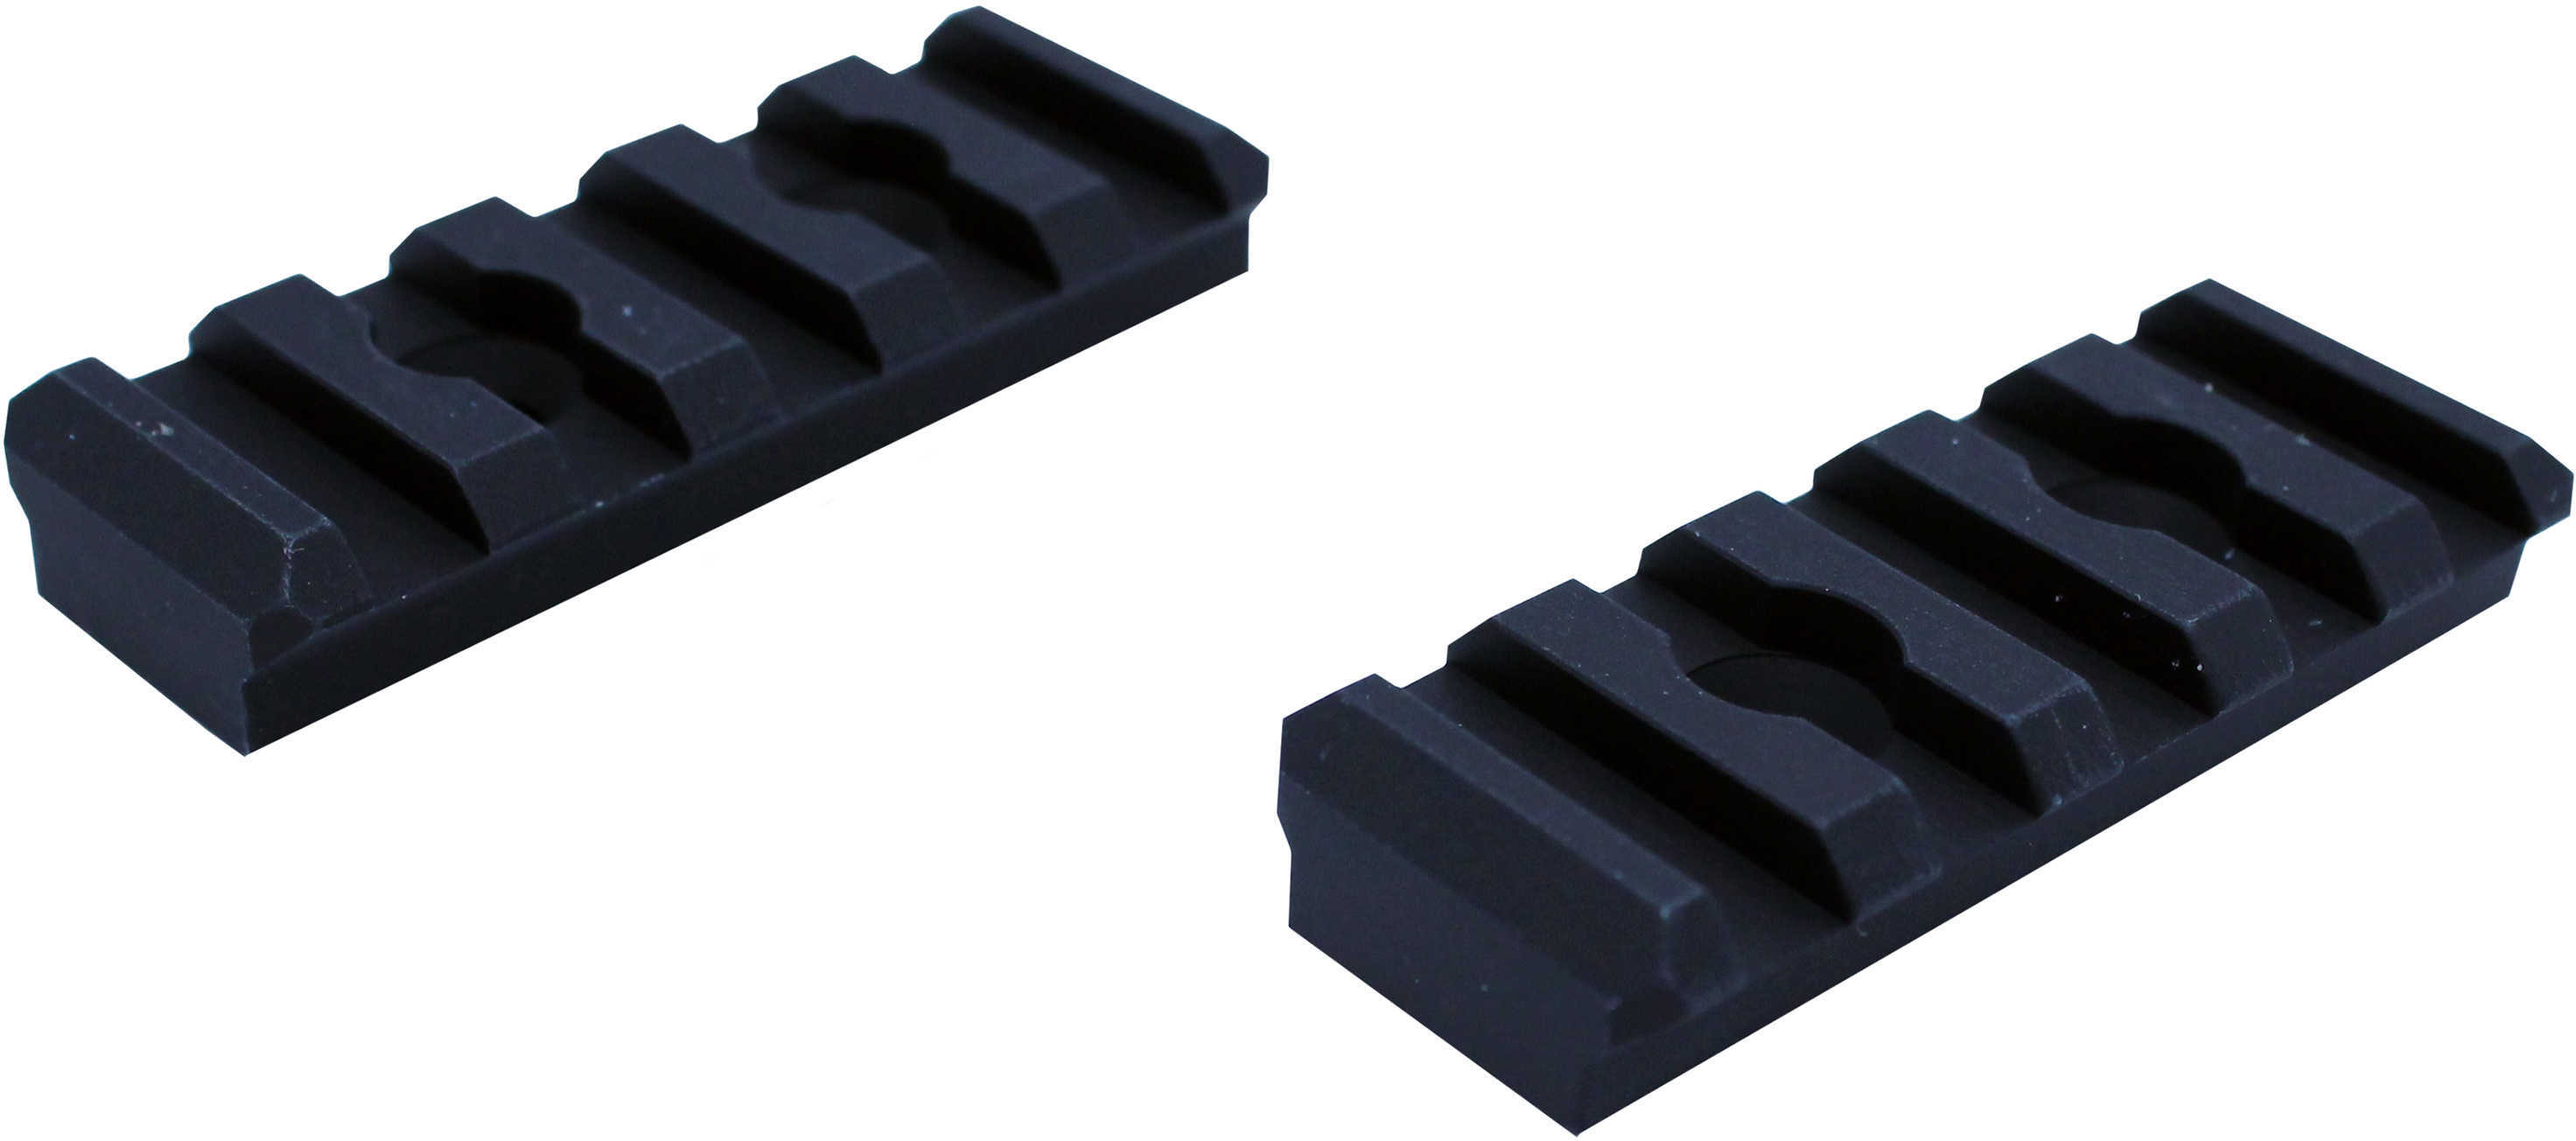 SigTac Sauer 2" Rail Adapter Keymod Black Md: RAIL-ADAPTER-KEYMOD-2IN